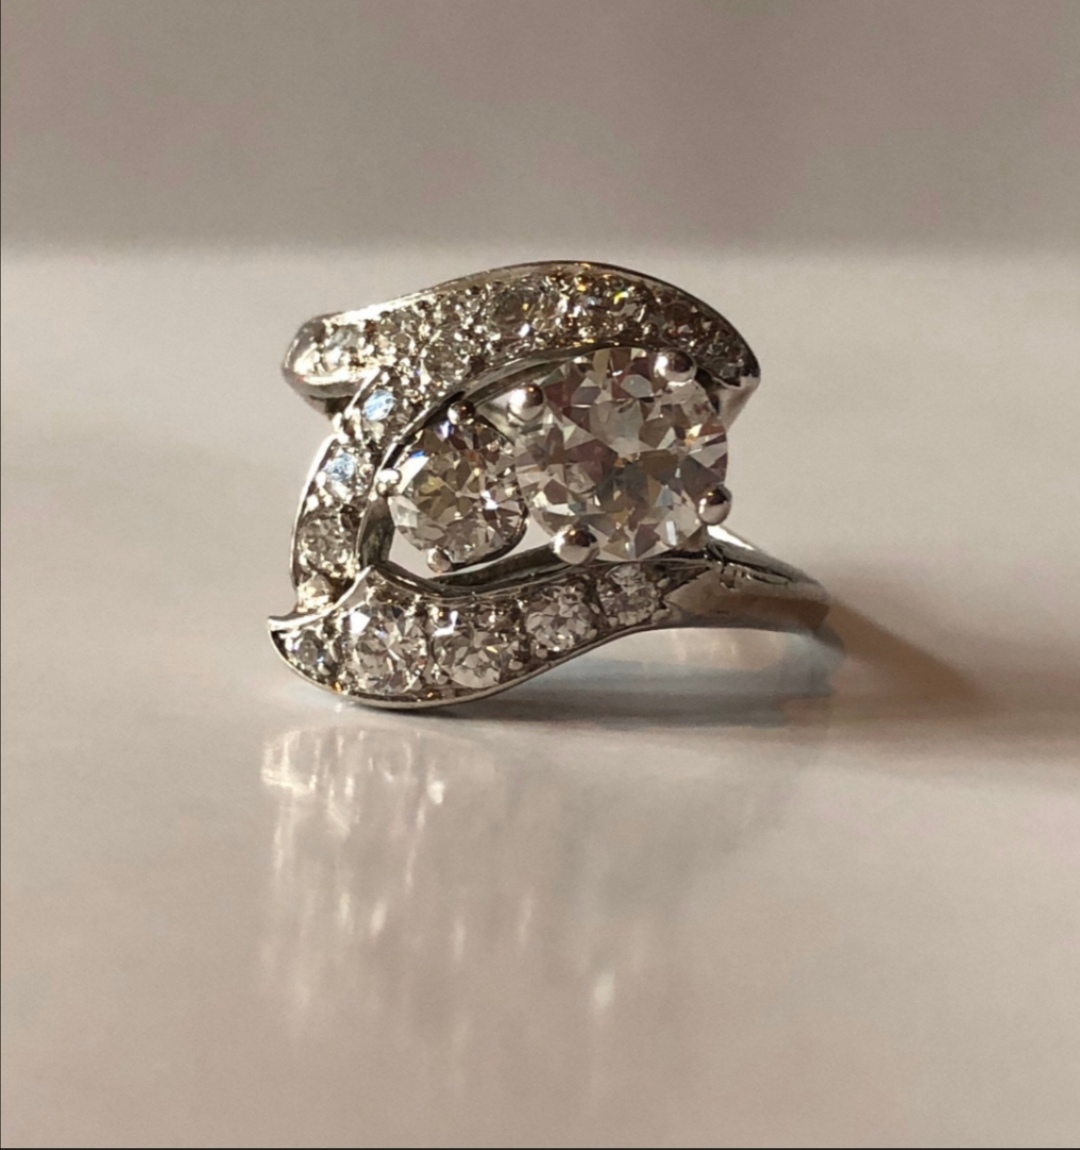 Art Deco engagement ring